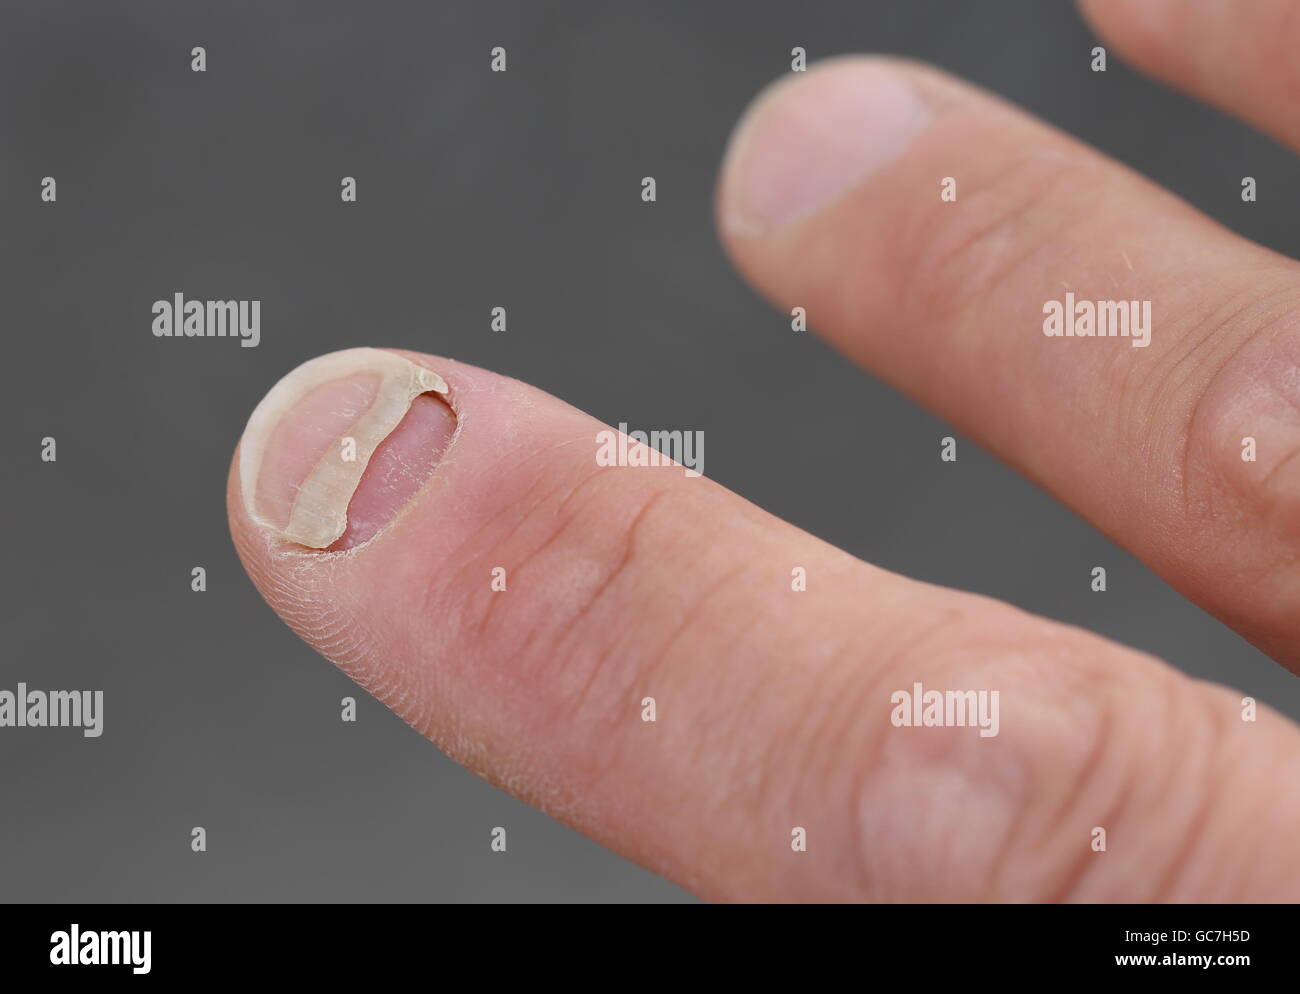 A Patient with nail detachment Stock Photo